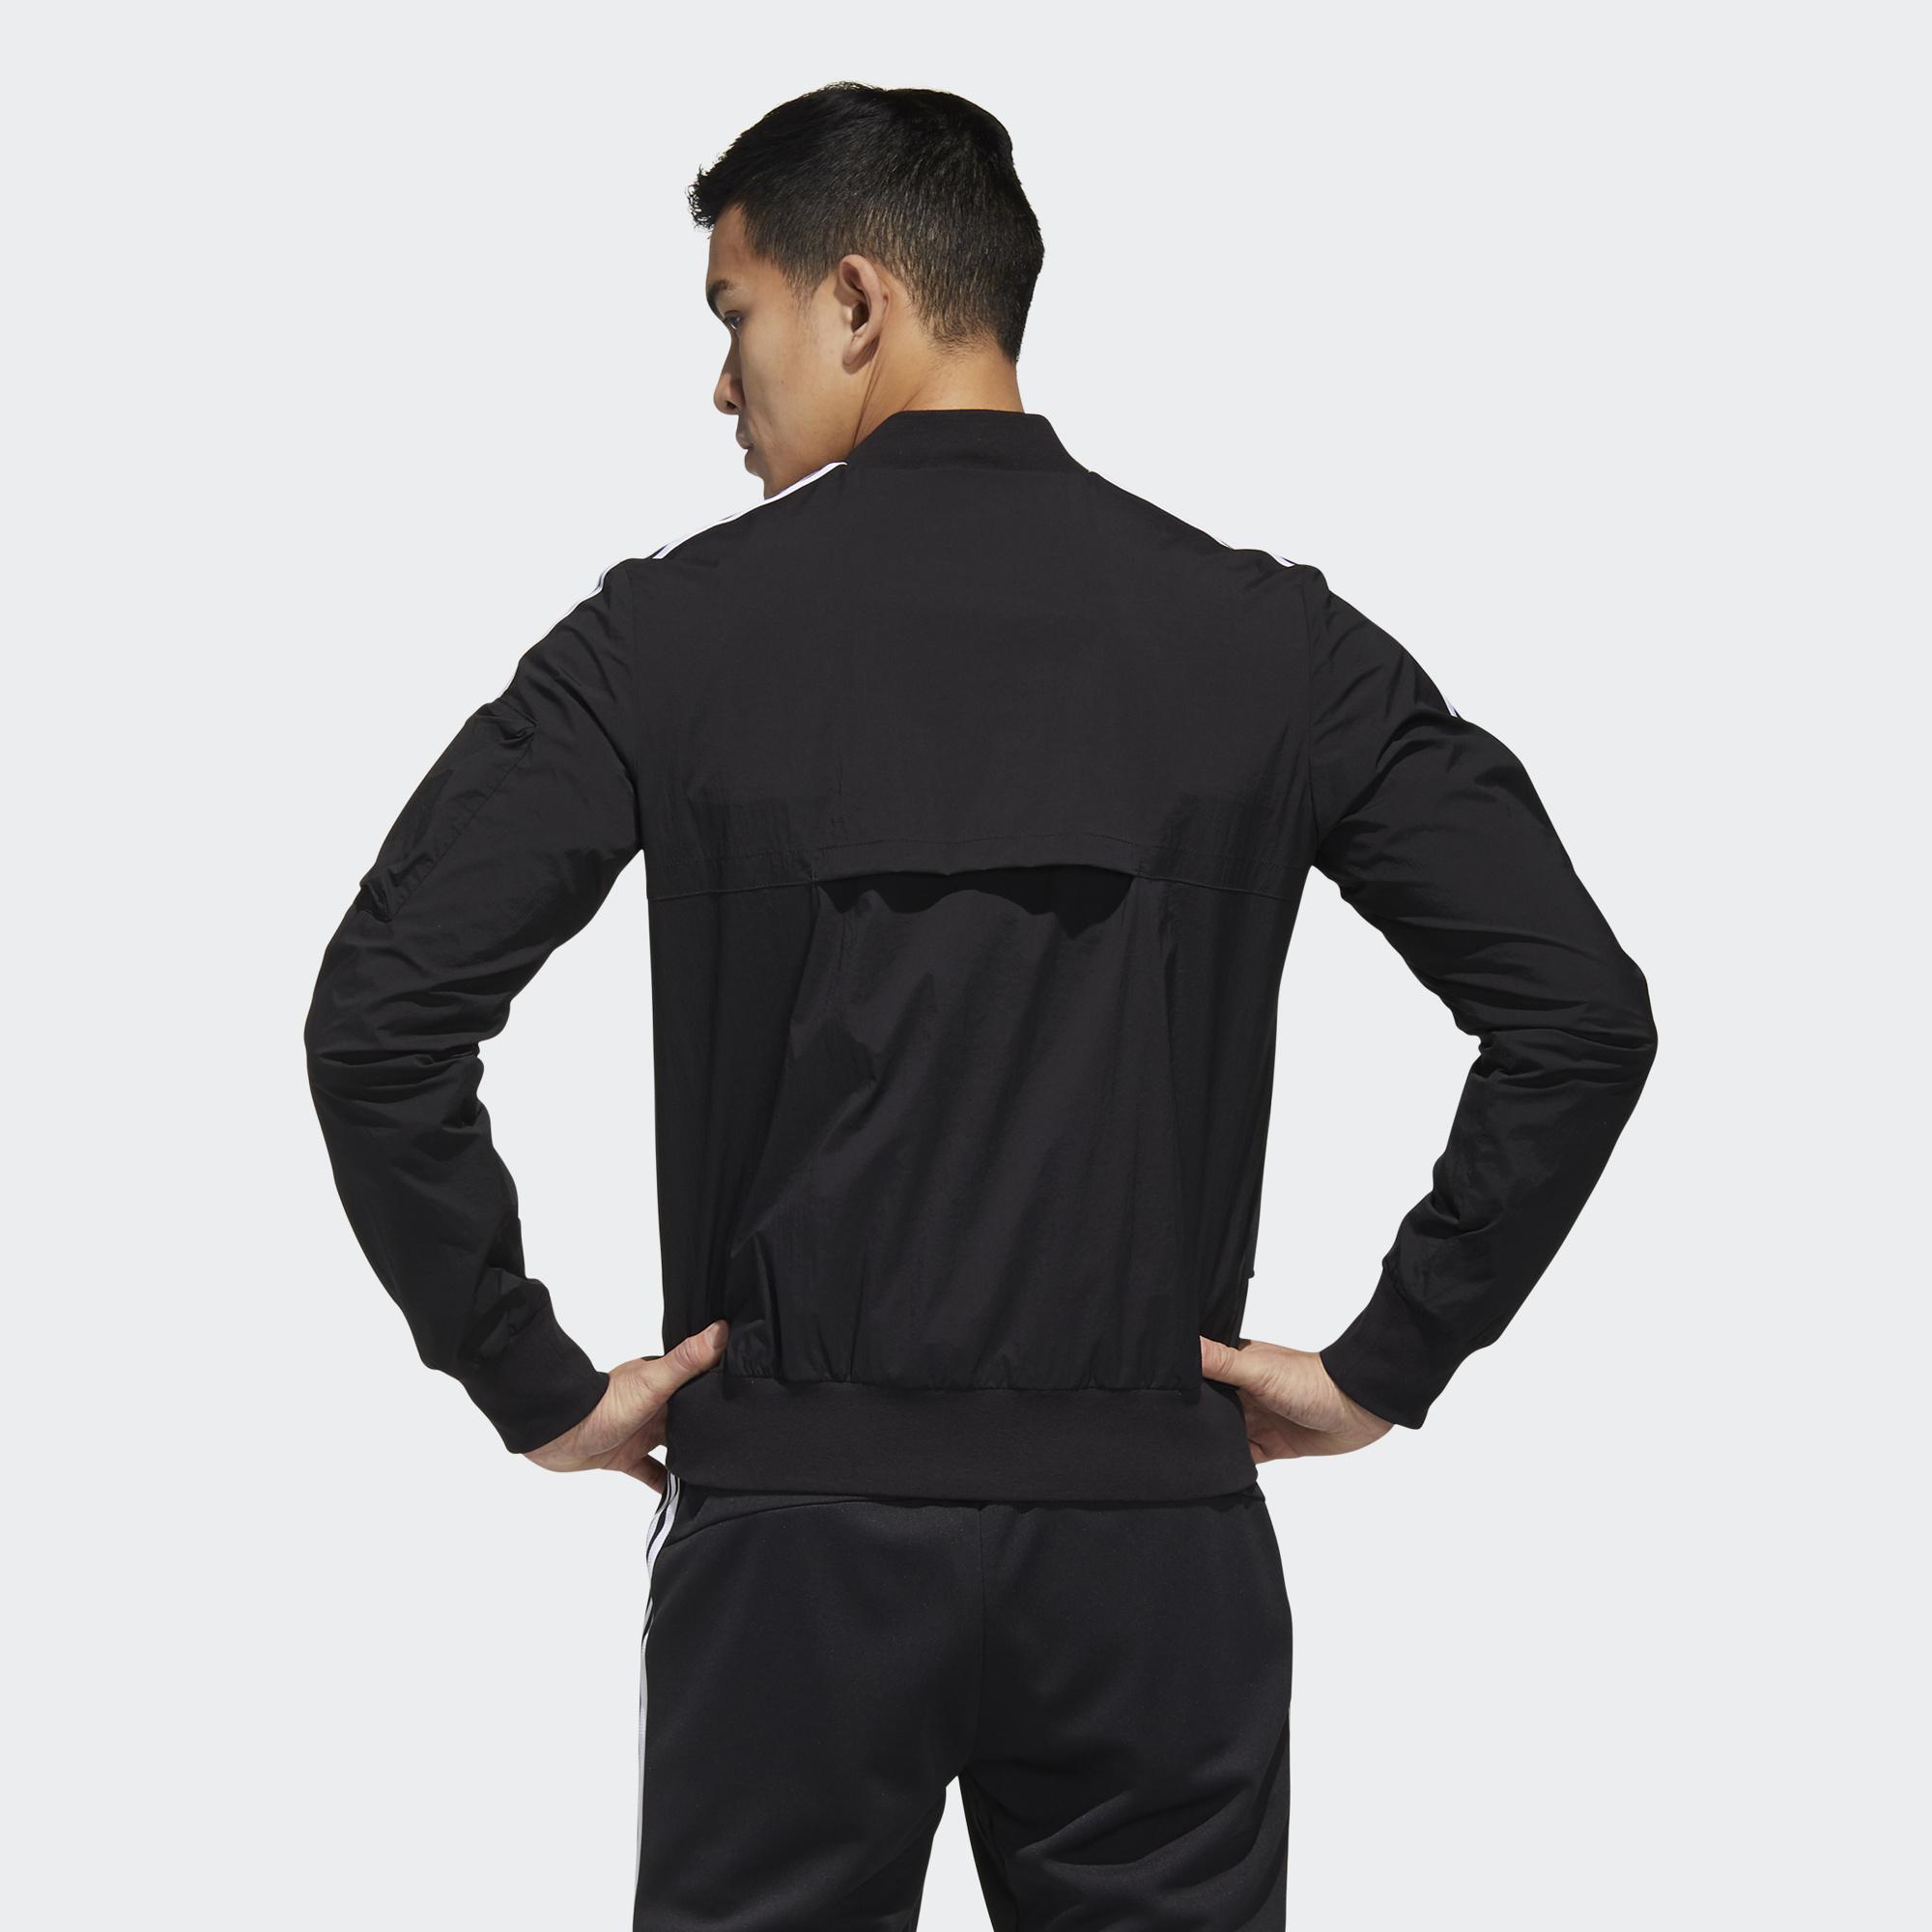 Adidas GH4802 Male CORE-NEO training 3-STRIPES sports jacket size M2